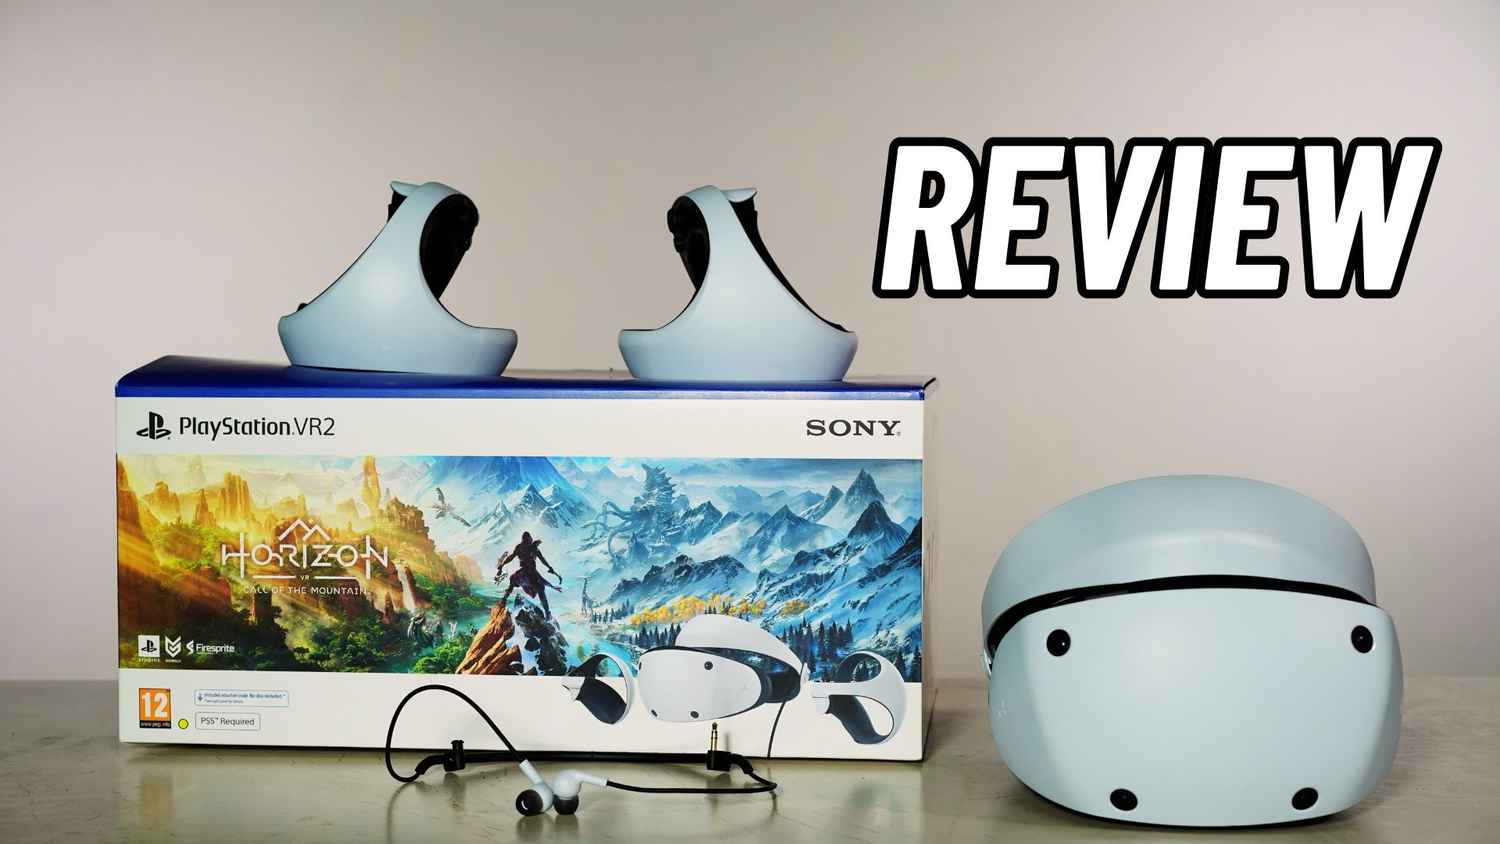 Sony PSVR 2 Review: A Worthy Successor To The Original PSVR?